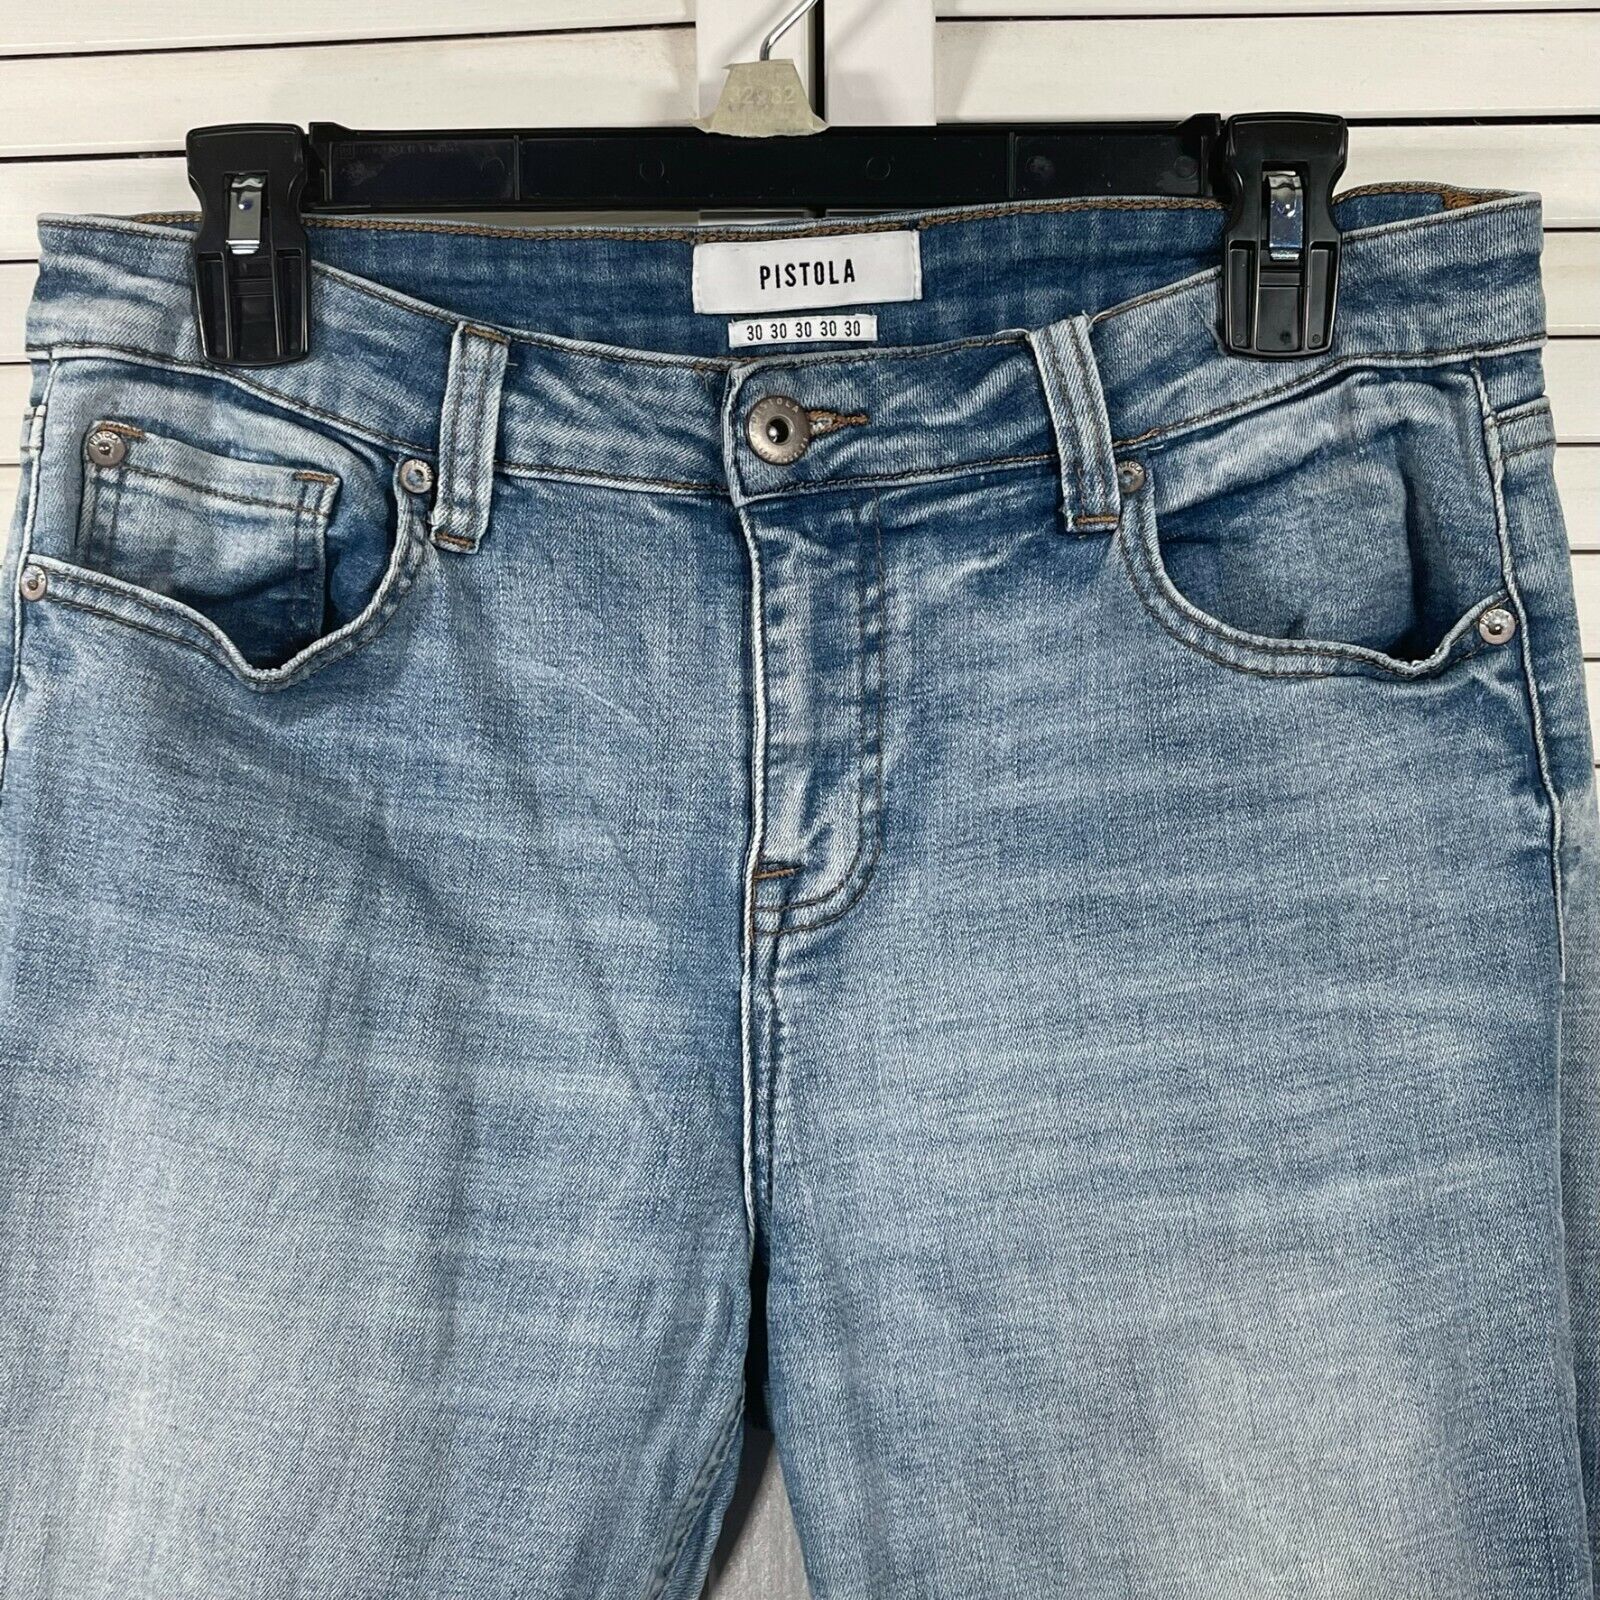 Pistola Women's Denim Blue Jeans Skinny Ankle Frayed … - Gem